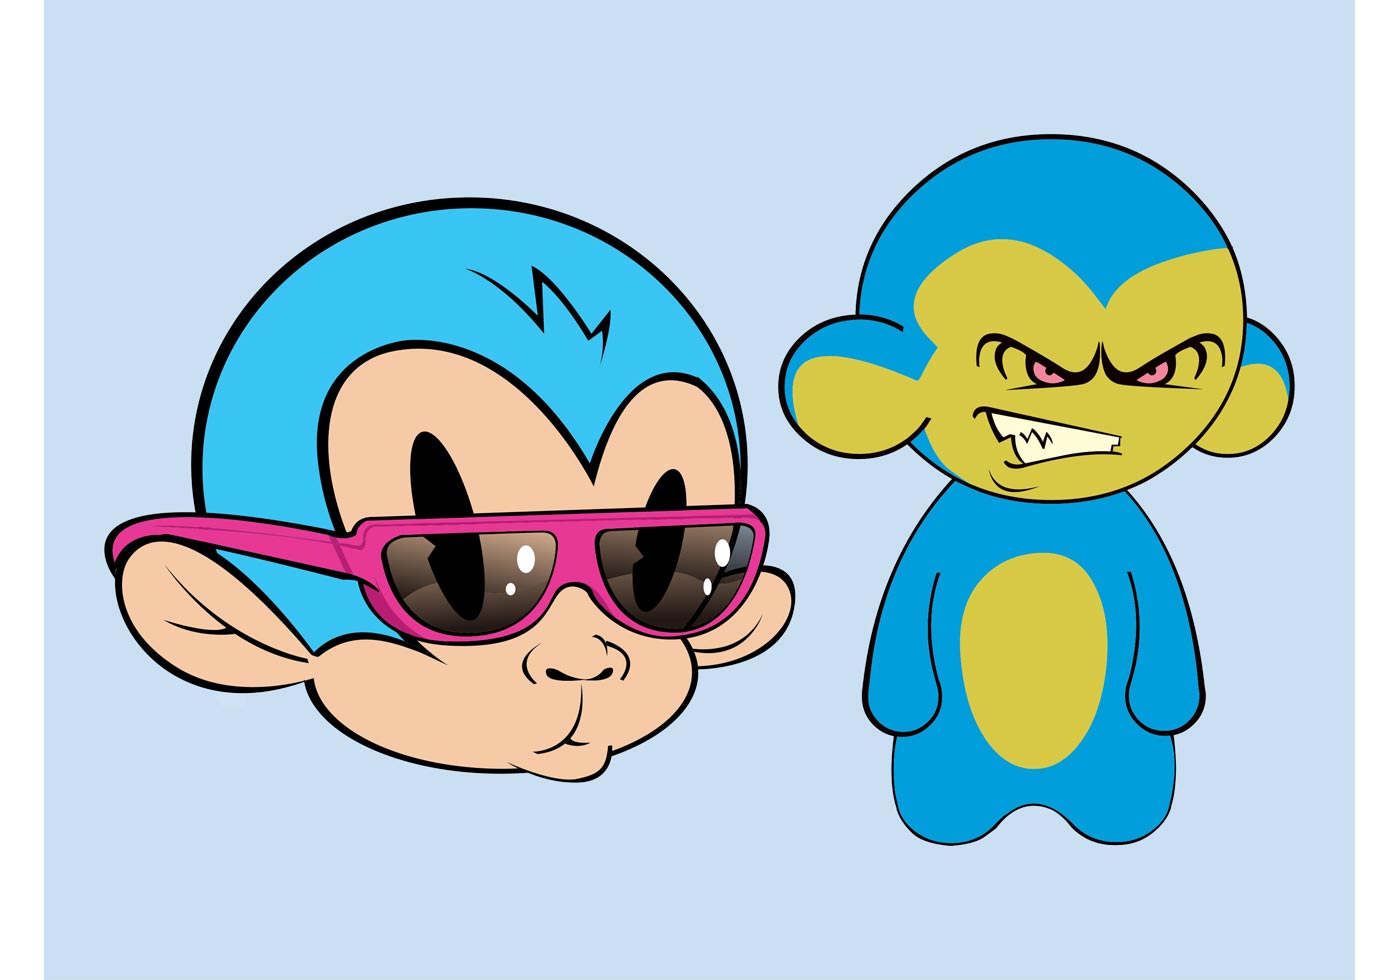 Cool Cartoon Monkeys - Download Free Vector Art, Stock Graphics & Images